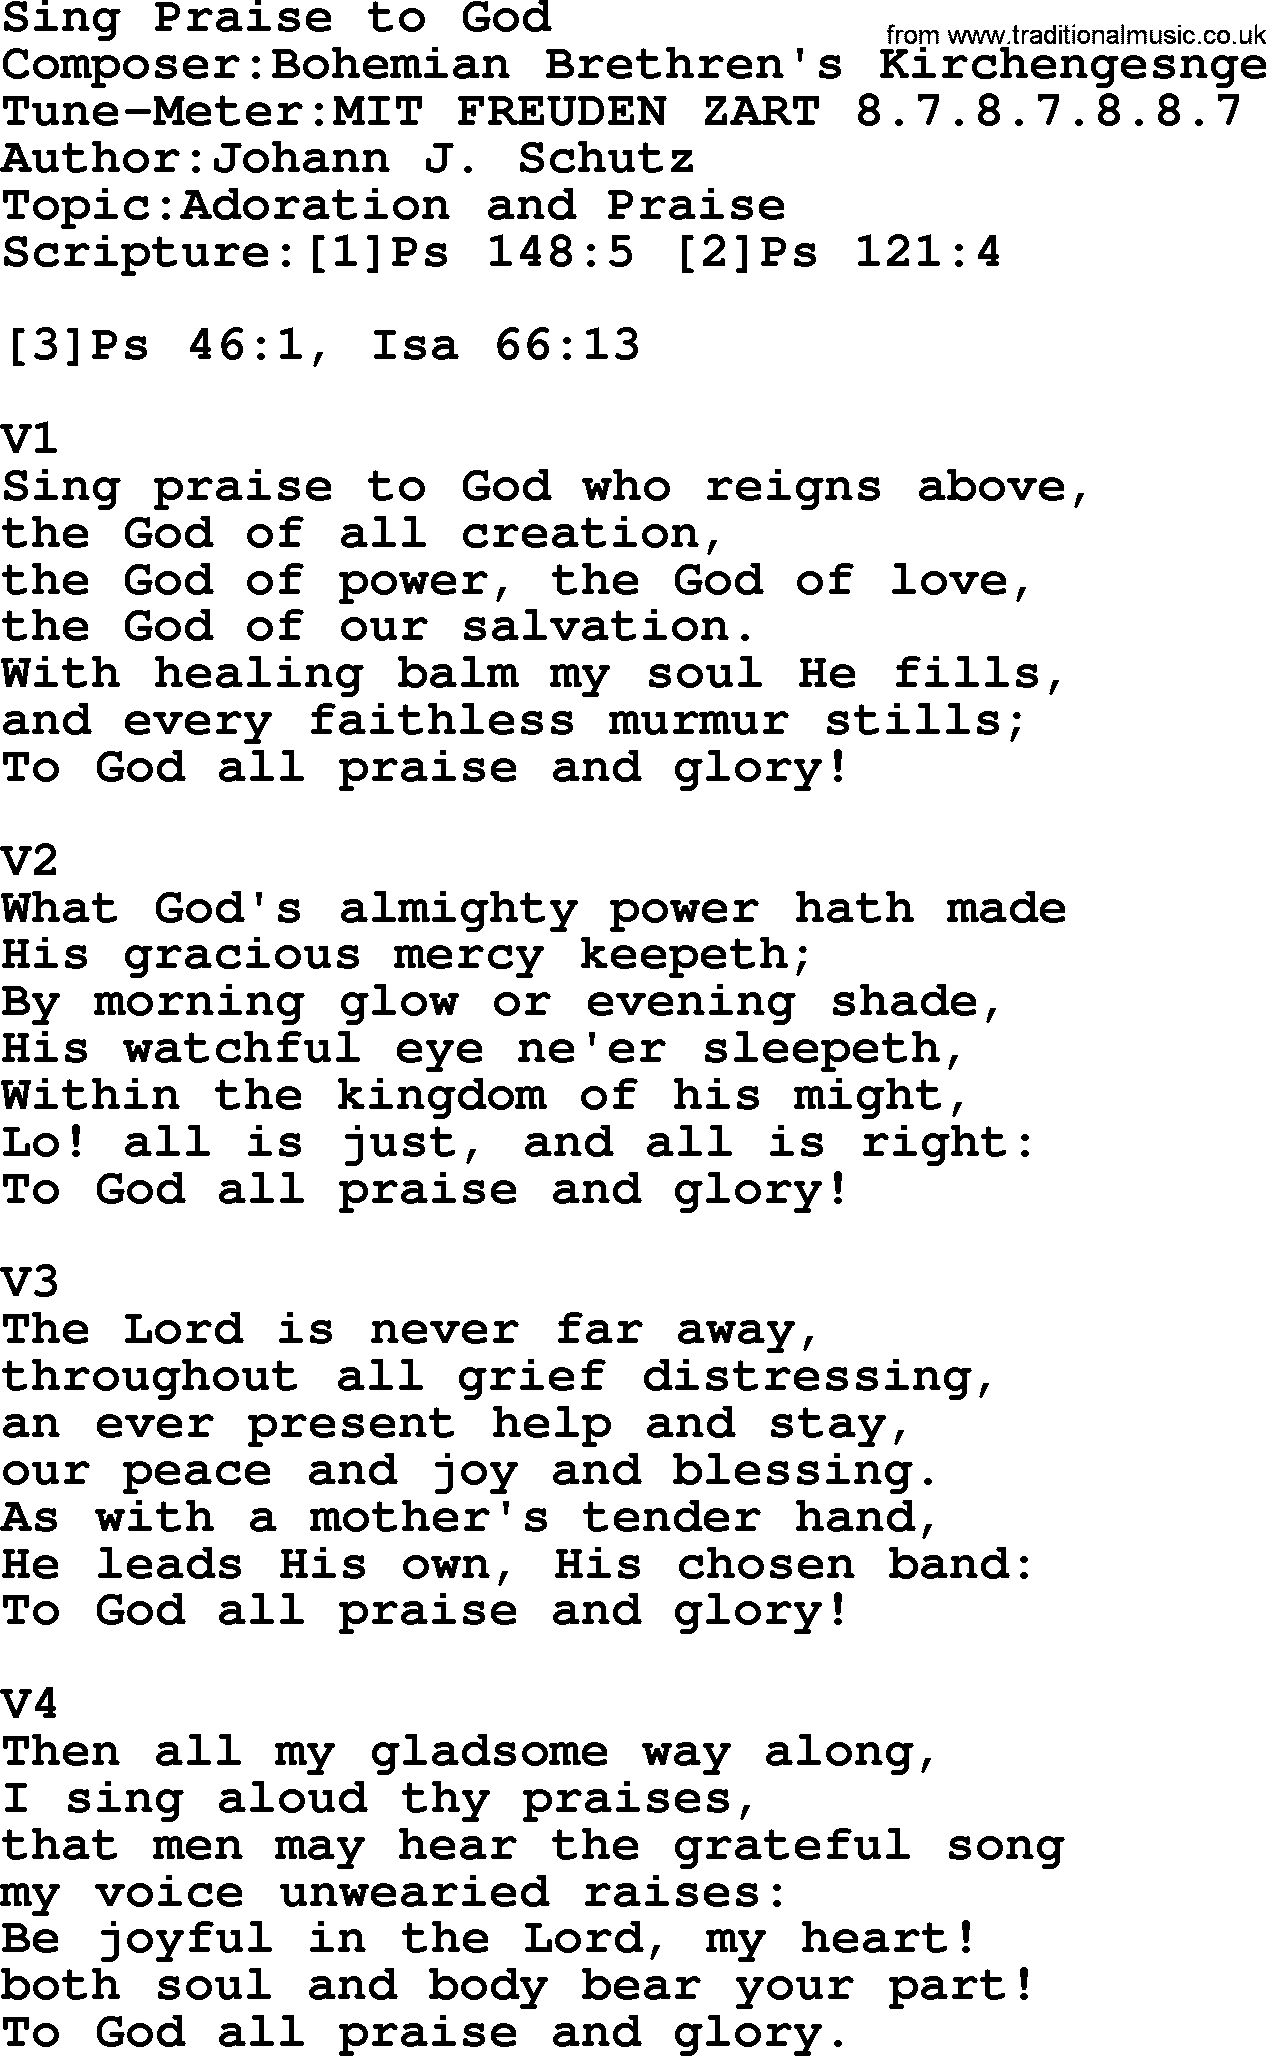 Adventist Hynms collection, Hymn: Sing Praise To God, lyrics with PDF